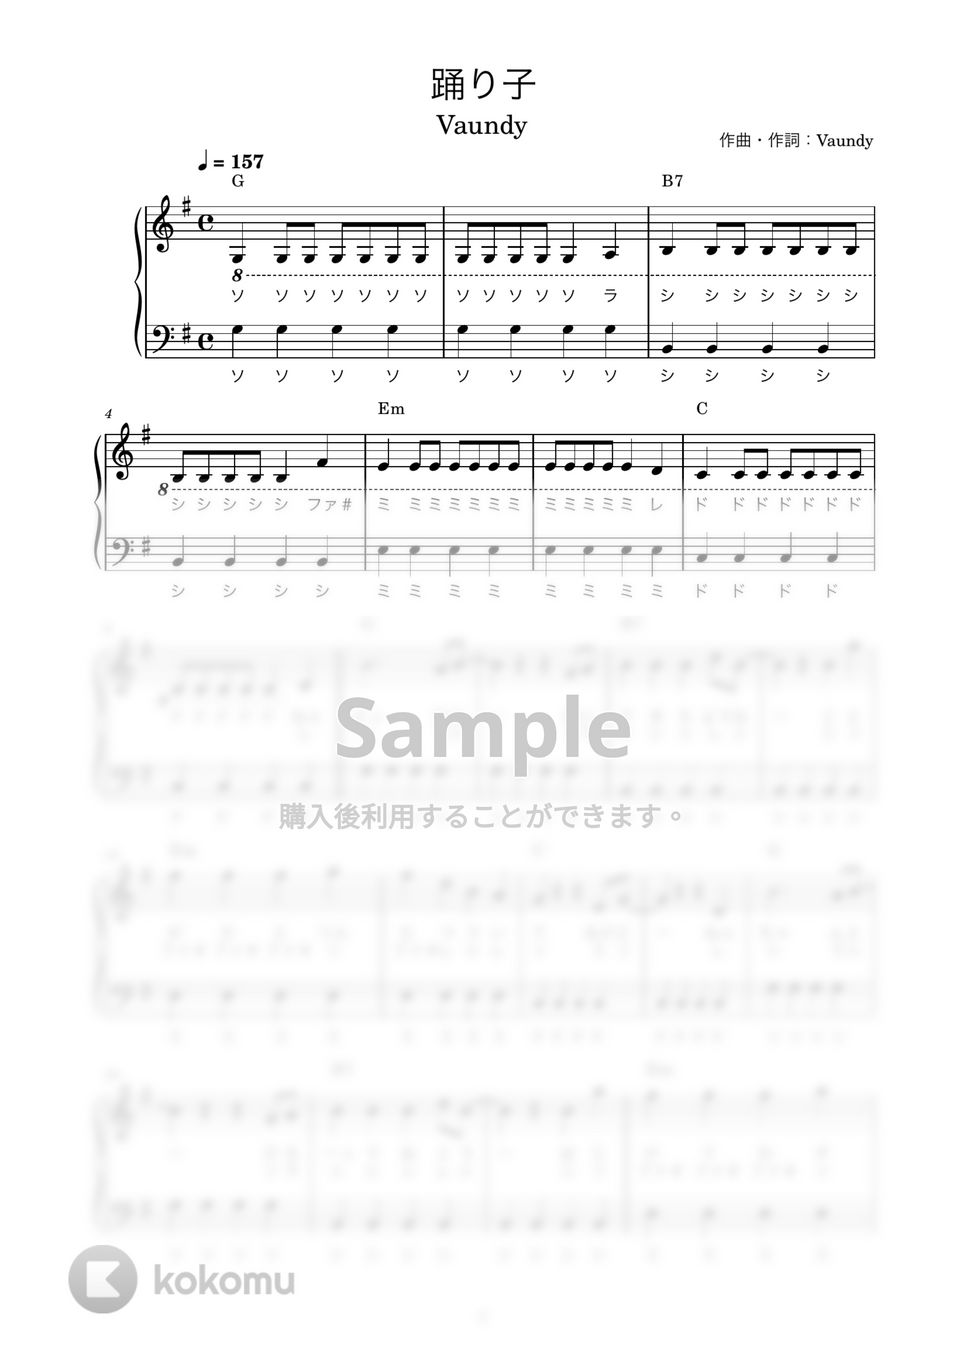 Vaundy - 踊り子 (かんたん / 歌詞付き / ドレミ付き / 初心者) by piano.tokyo